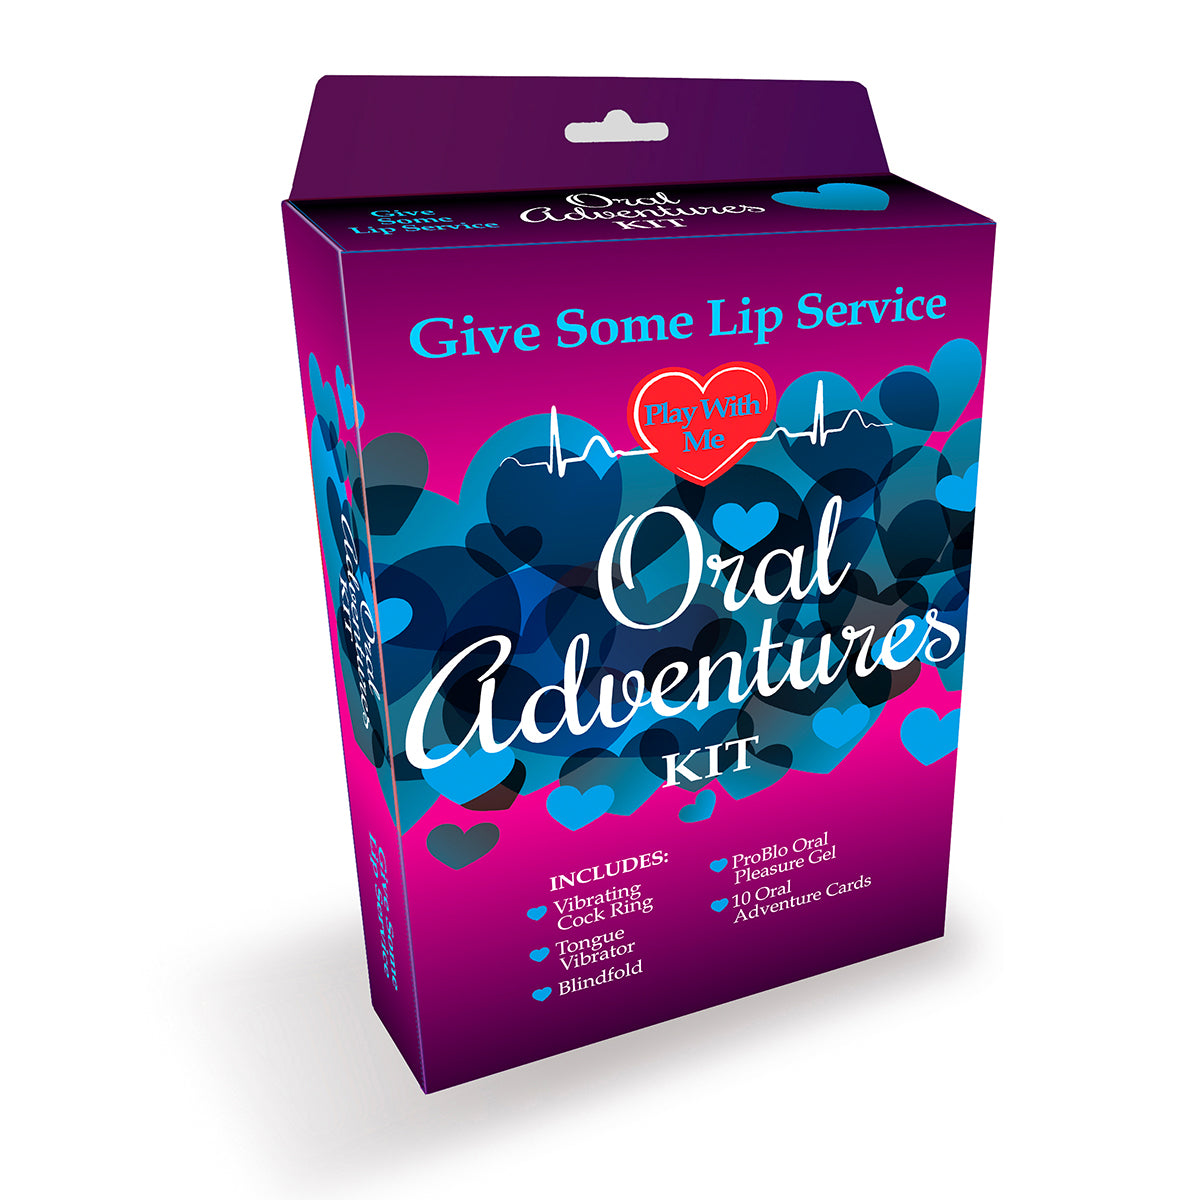 Oral Adventures Kit